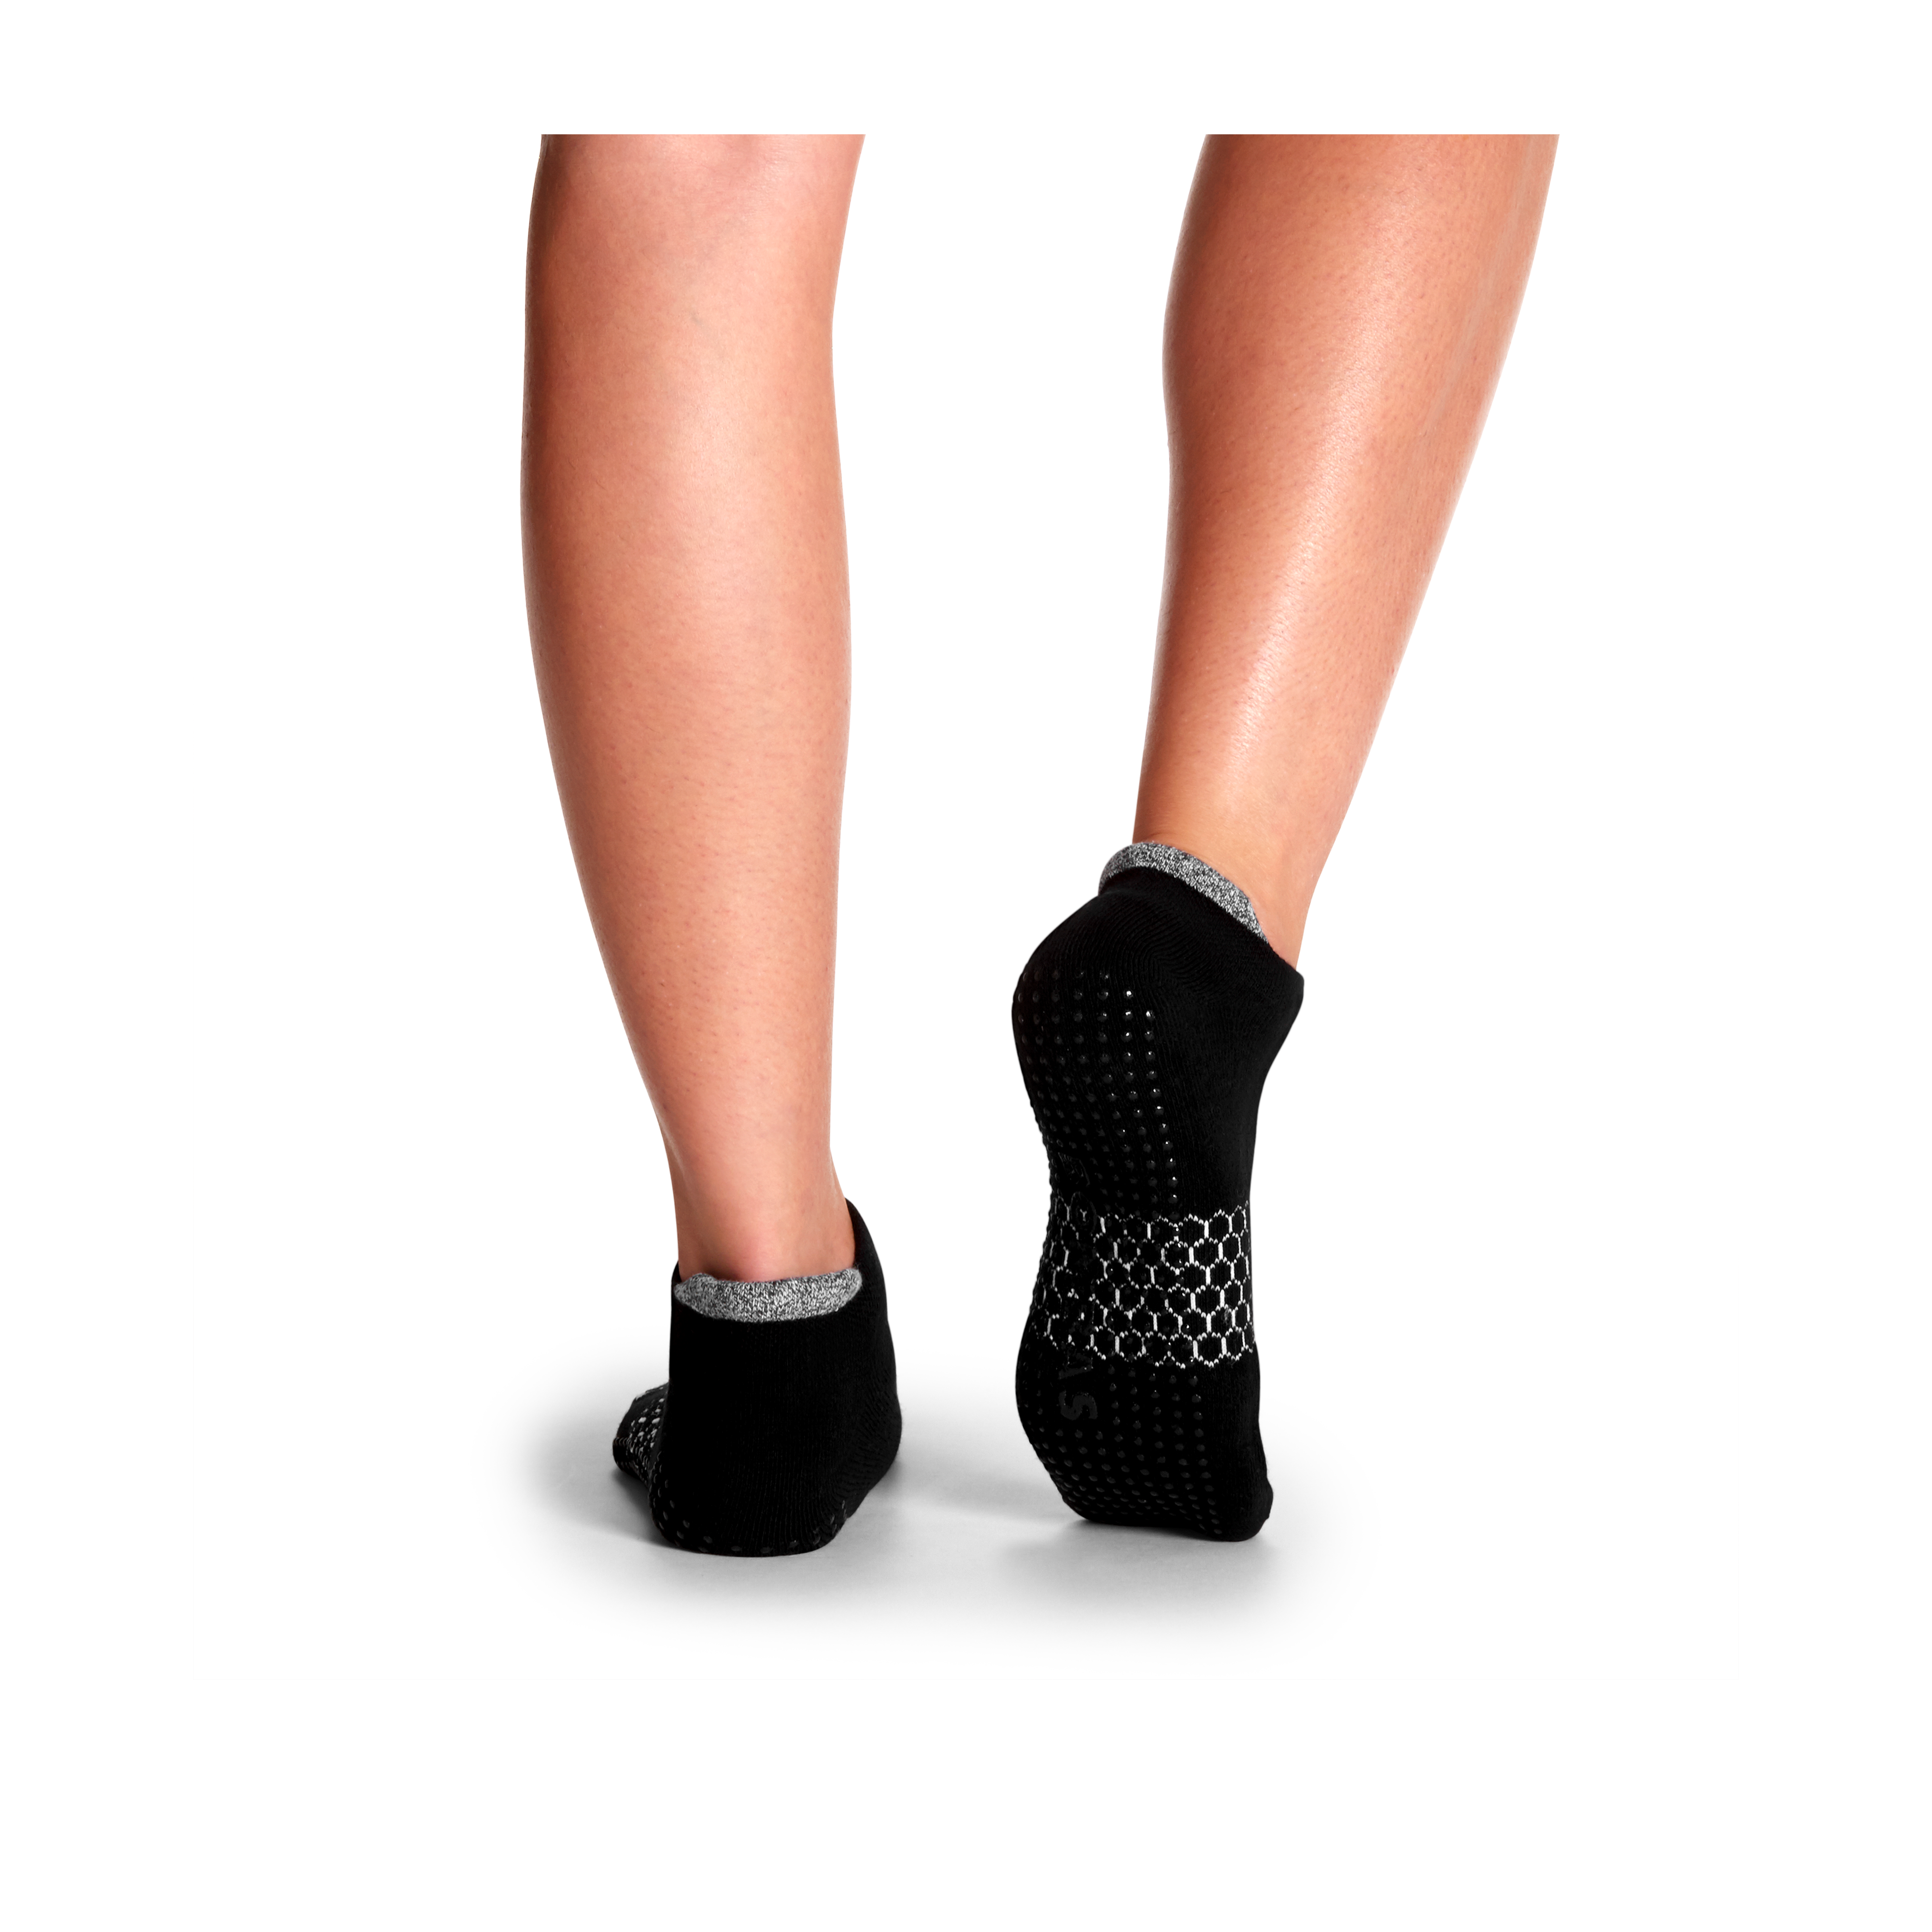 SINGER22 Exclusive Healing Heels Get A Grip Pilates Socks